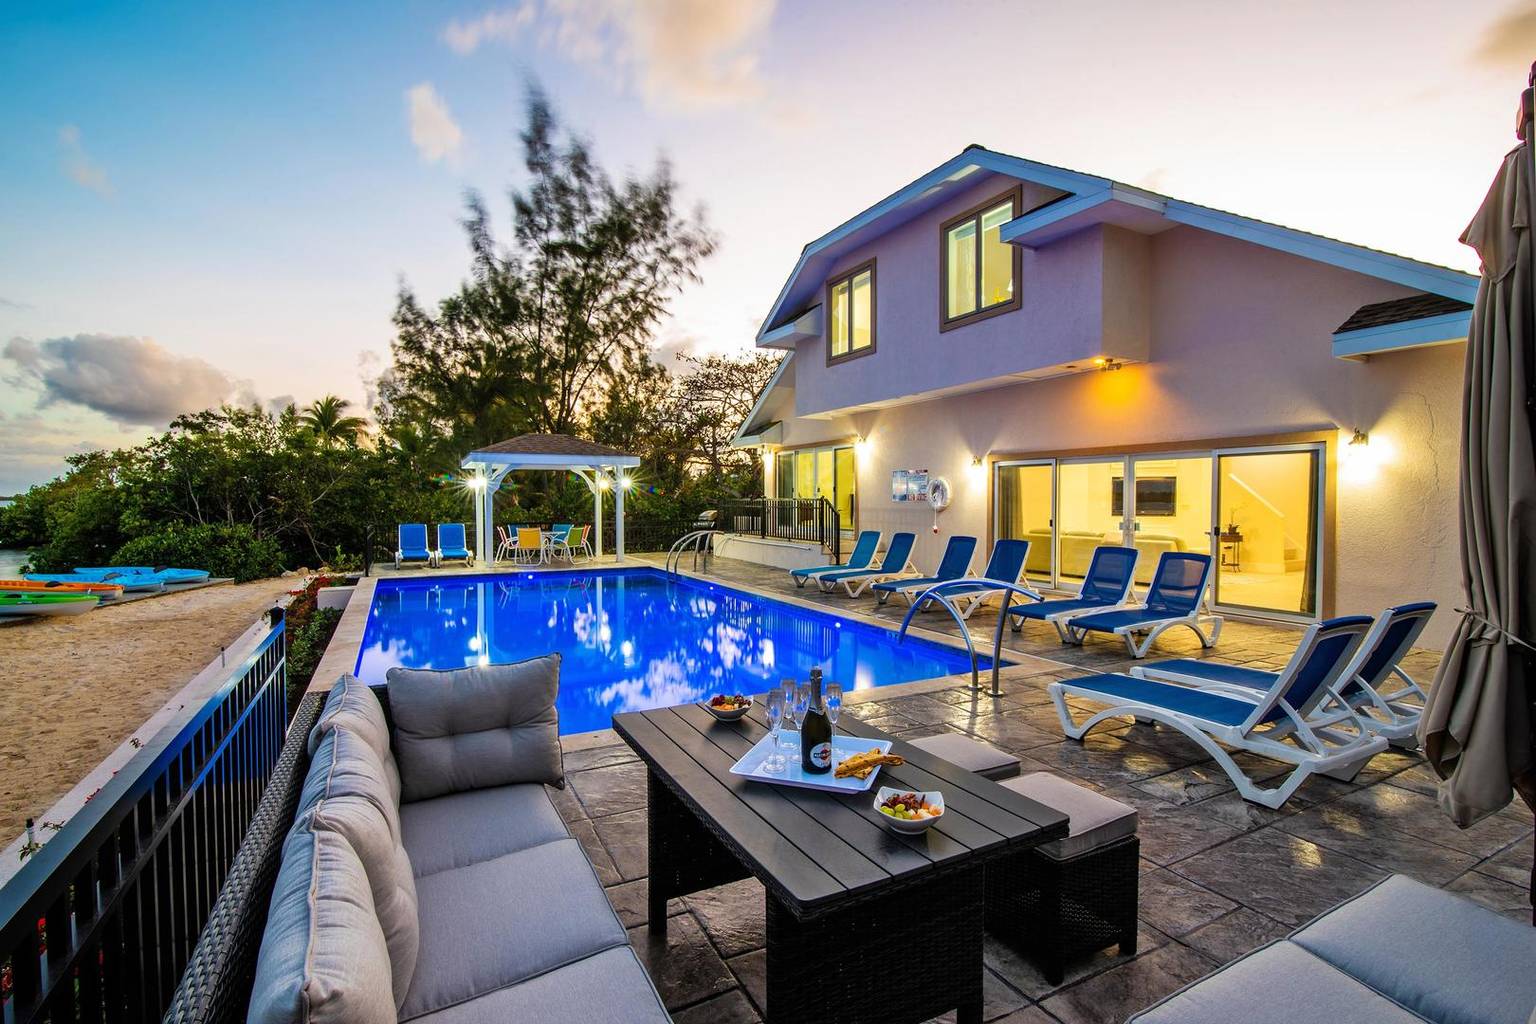 Cayman Kai Vacation Rental